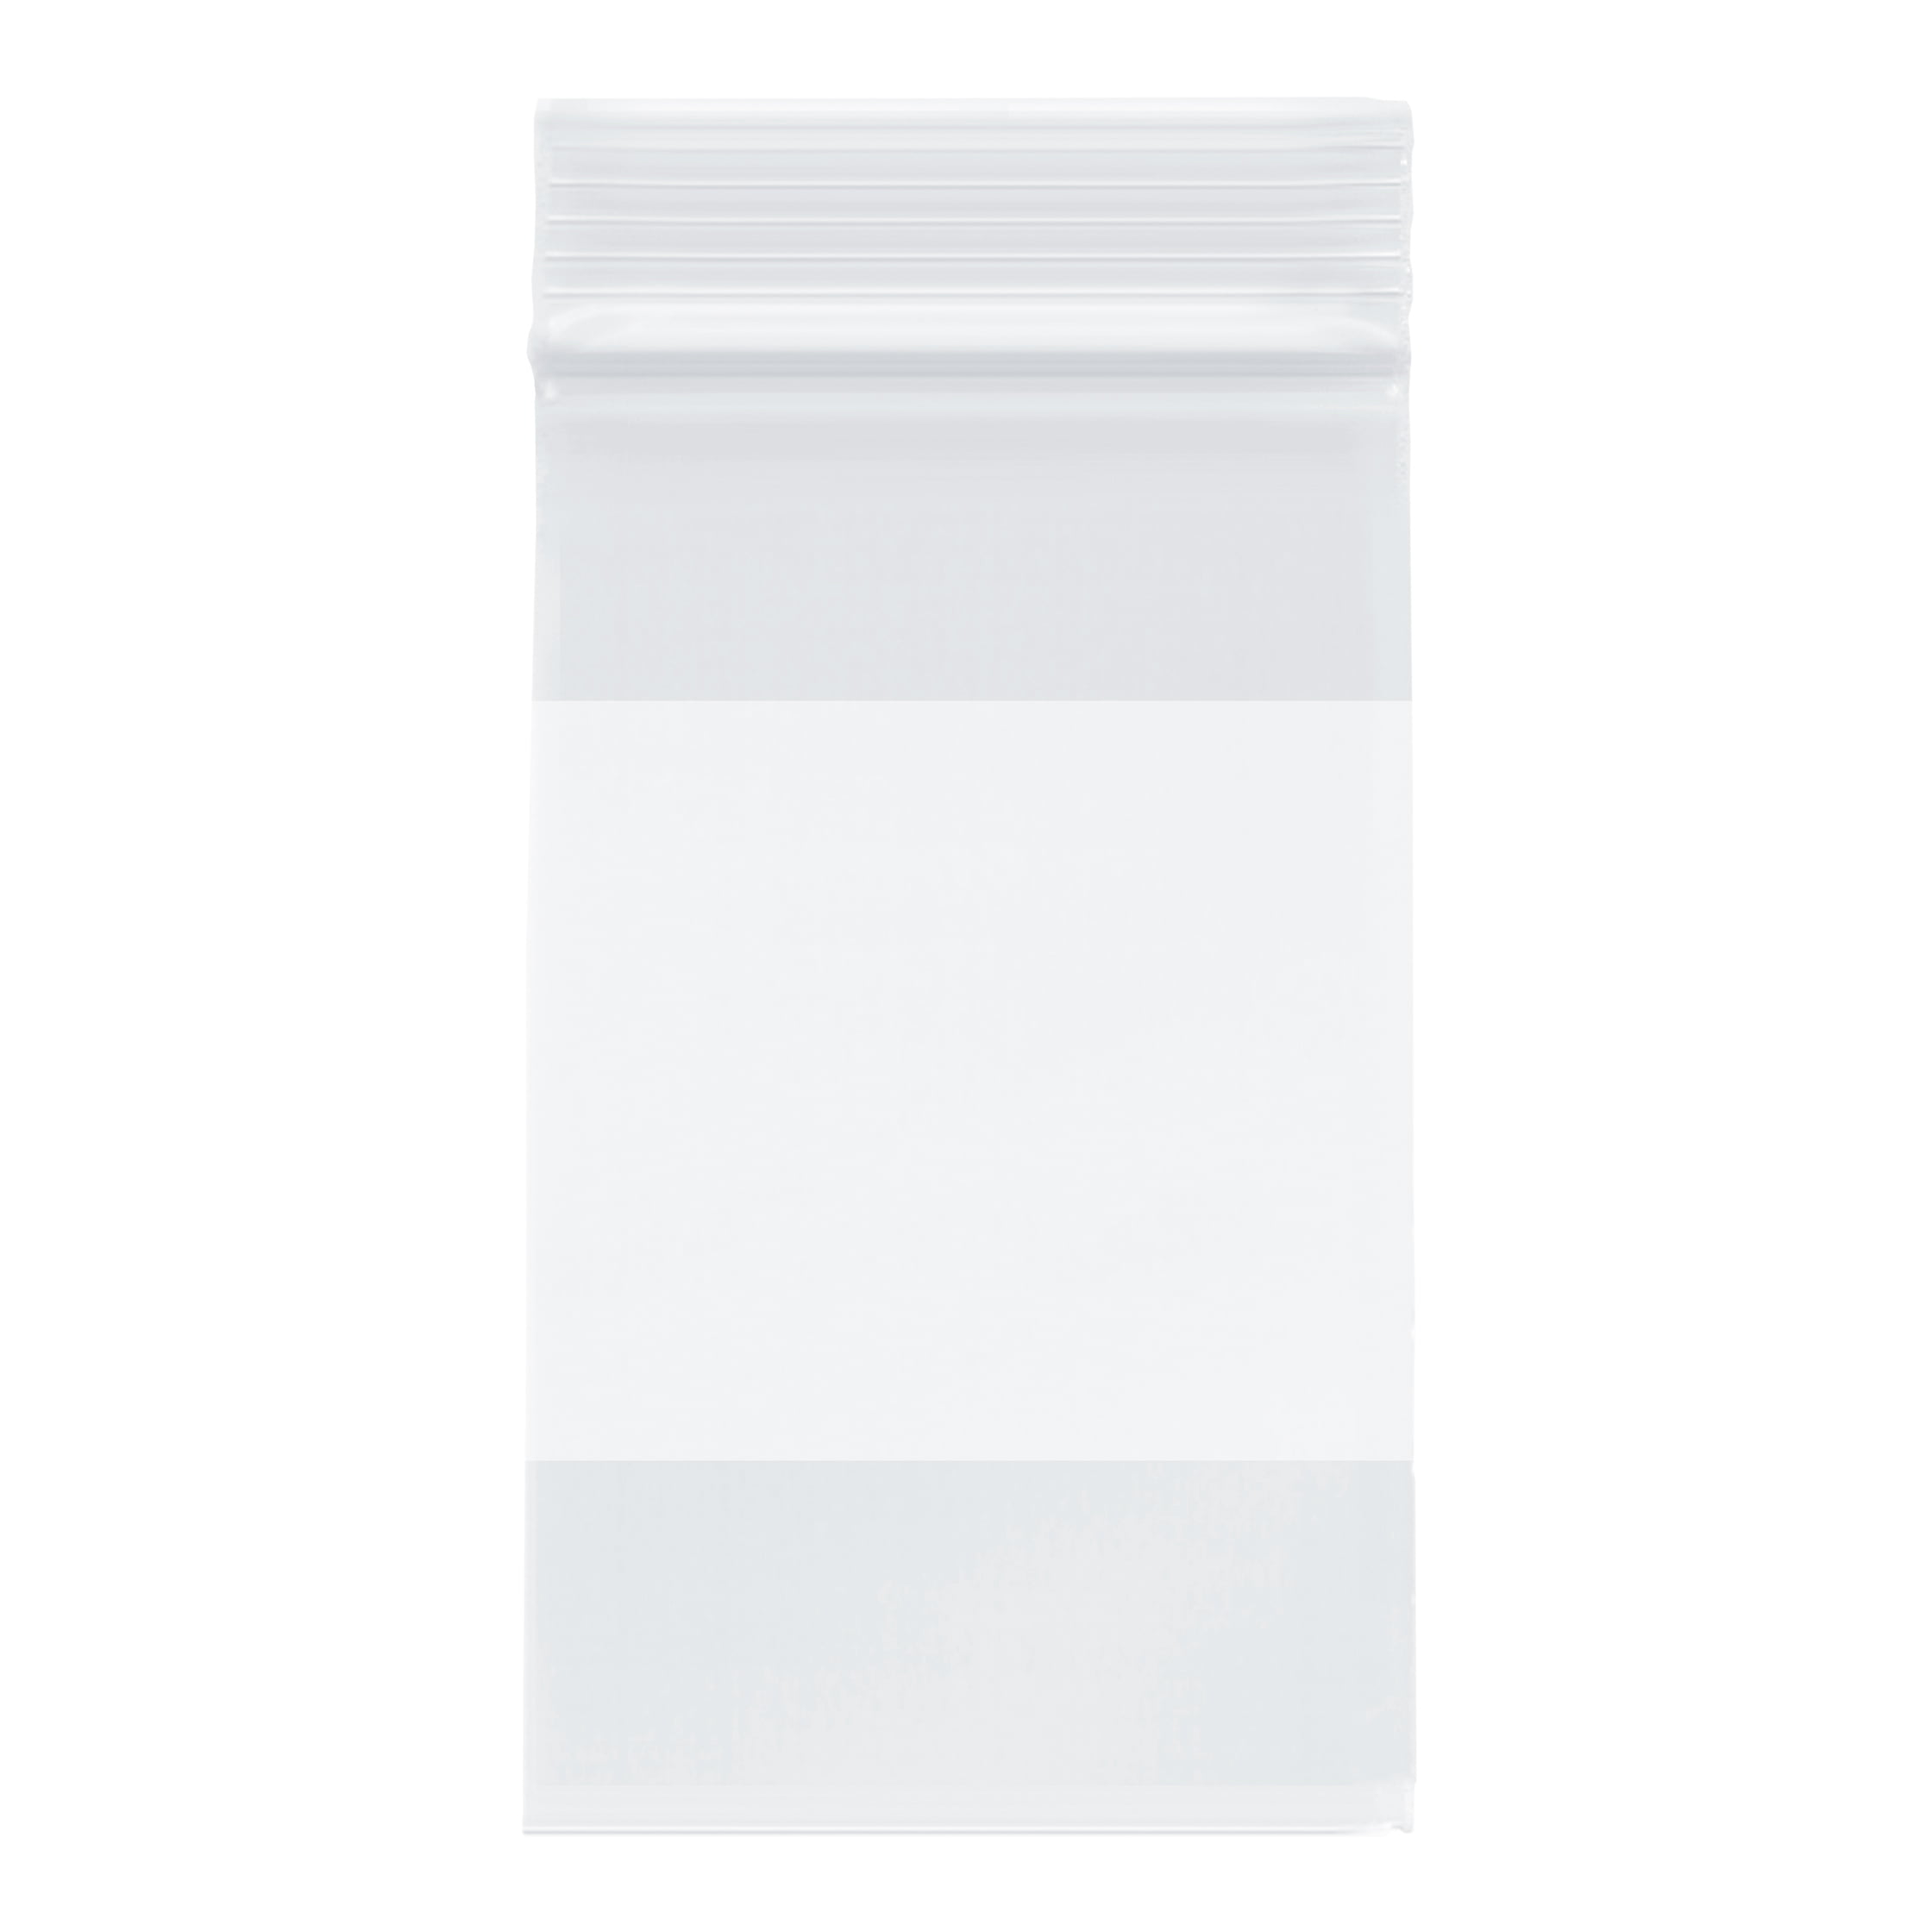 4 Mil Reclosable Bag with White Block 3" x 4" Plastic Bag Durable Clear 1000 Pcs 